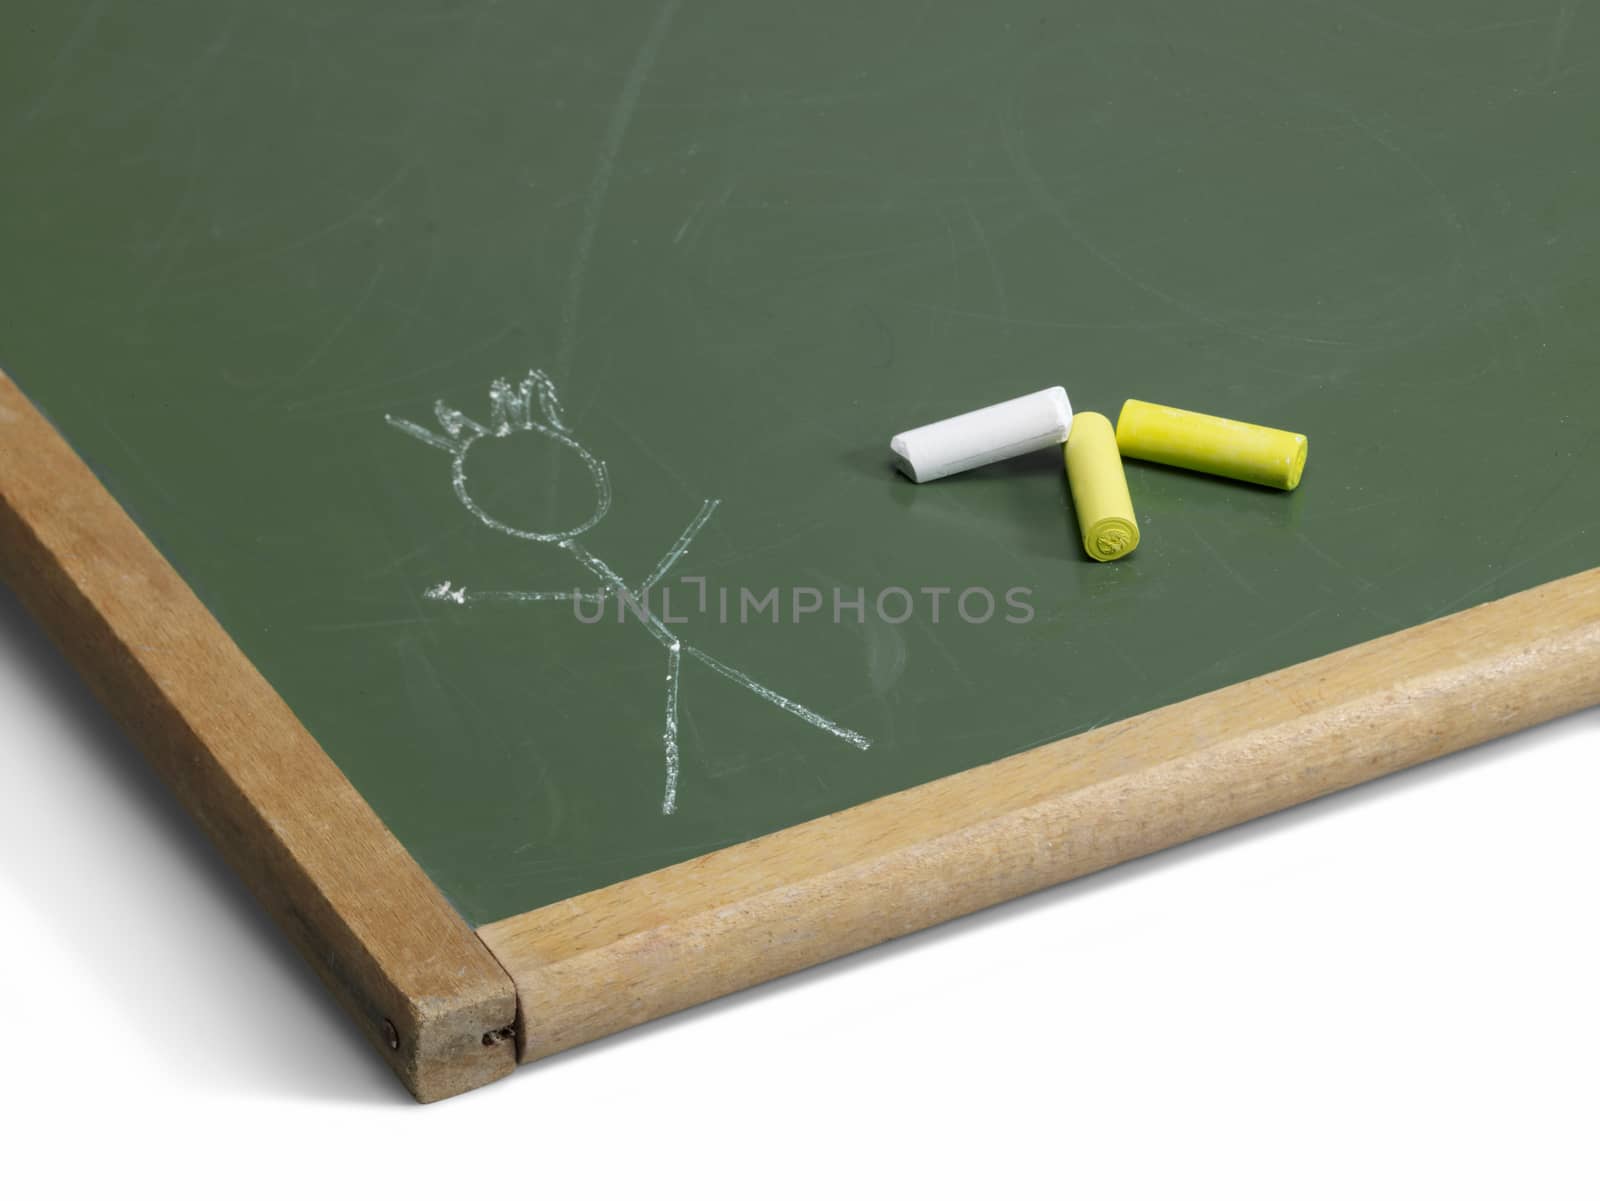 blackboard and stick man by gewoldi